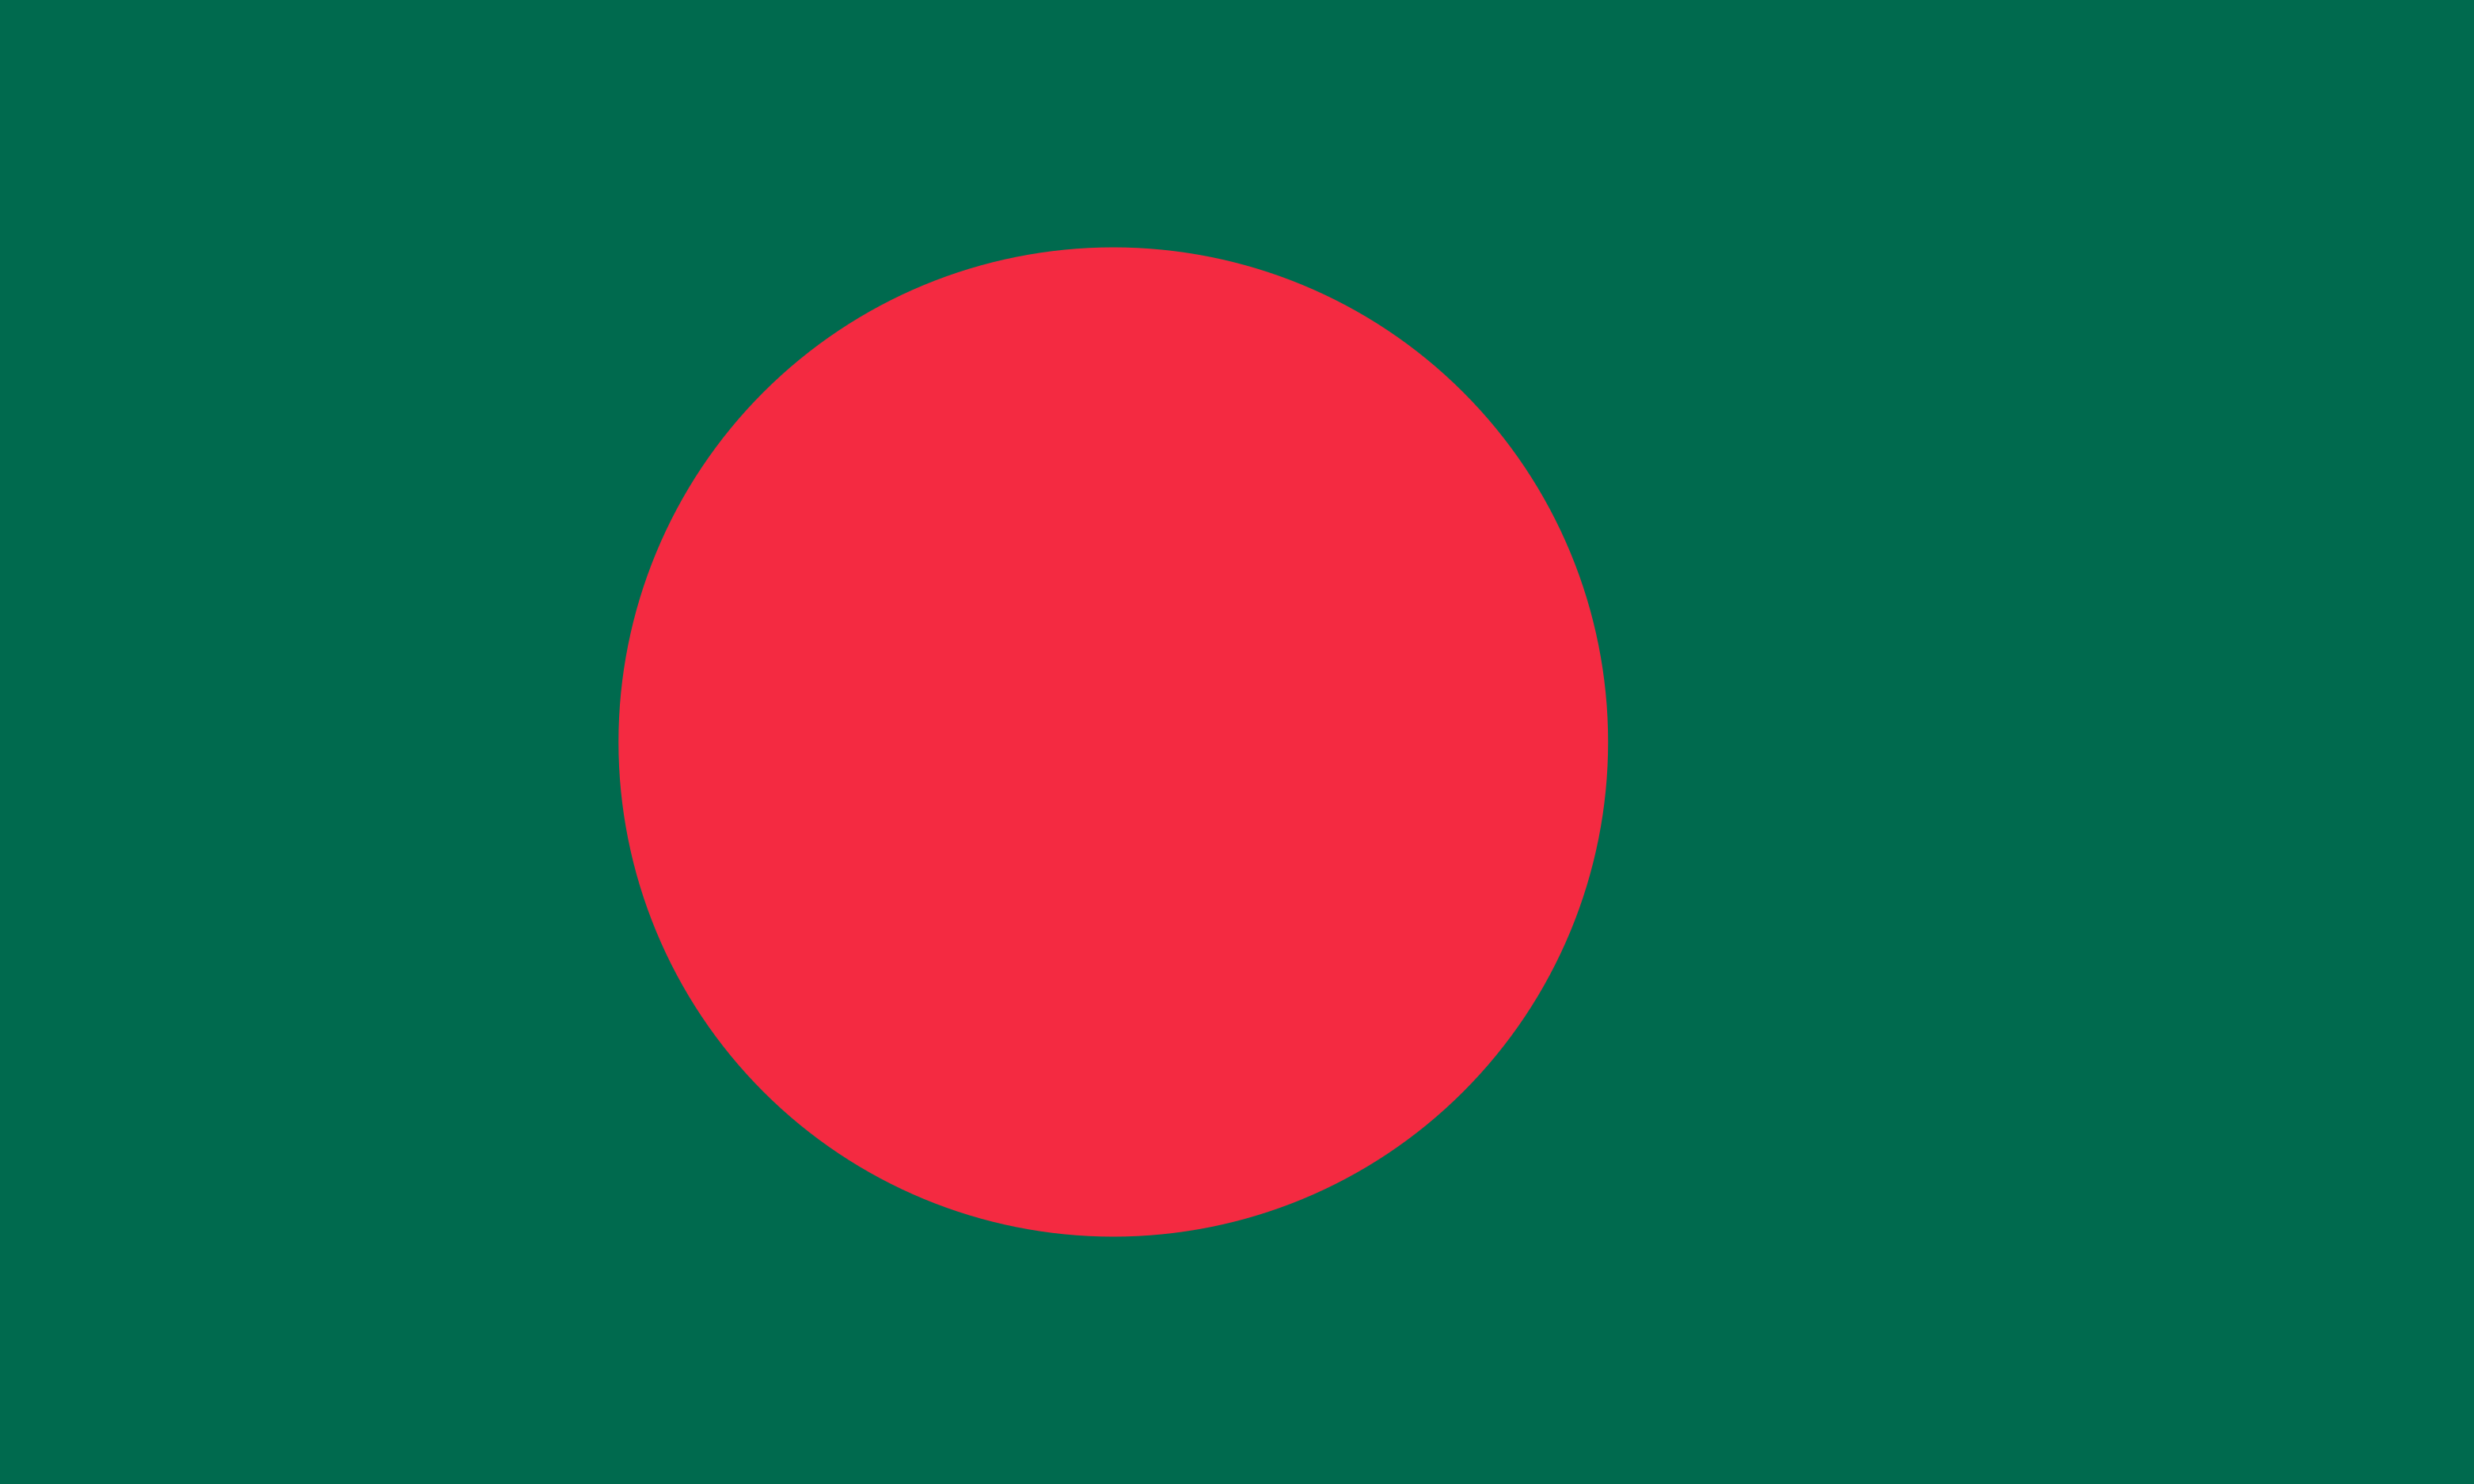 Free Bangladesh Flag Documents: PDF, DOC, DOCX, HTML & More!